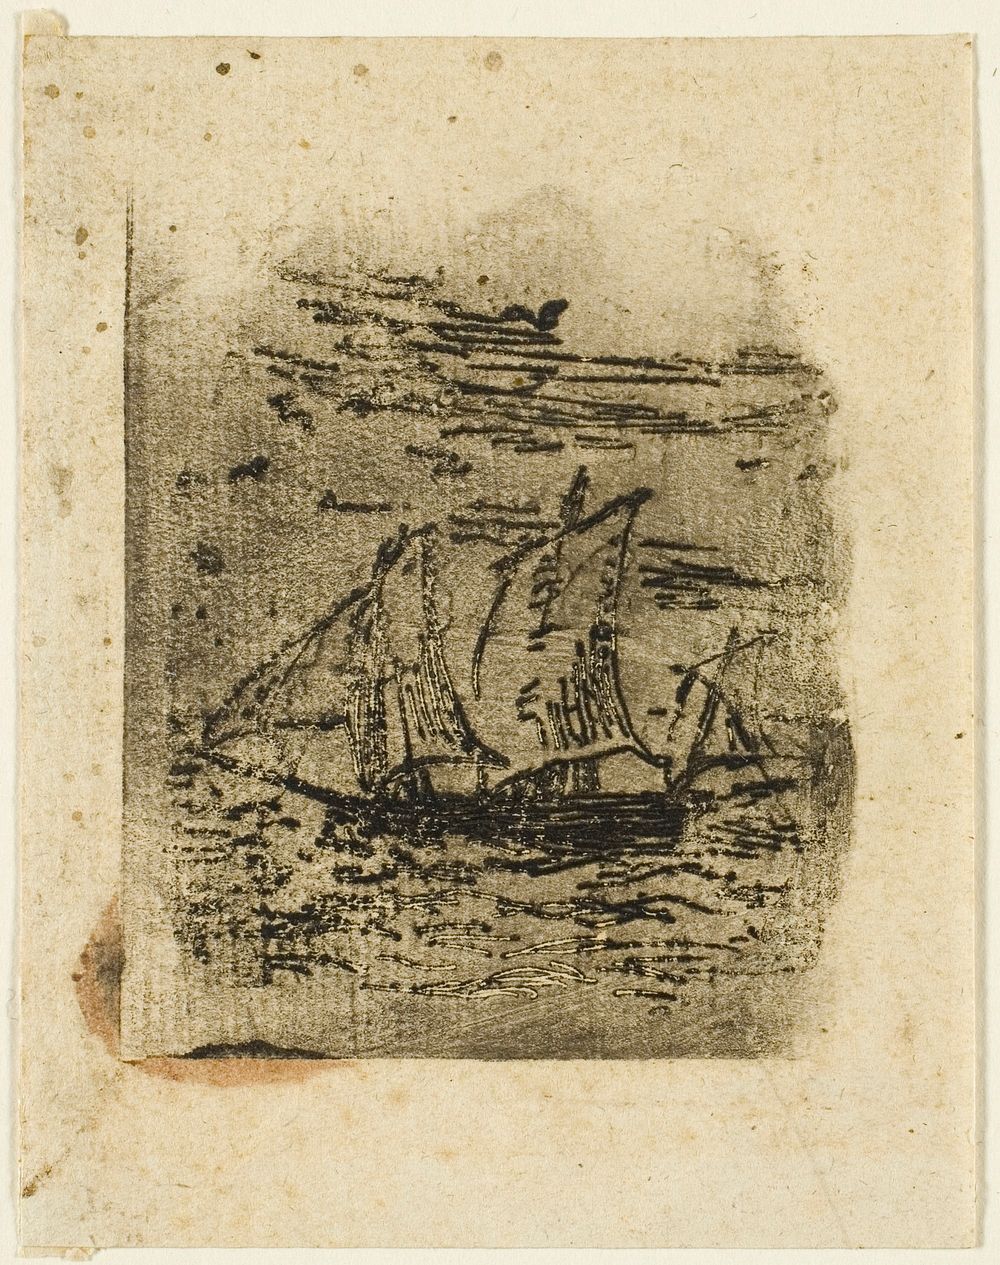 A Vessel Under Sail by Jean François Millet